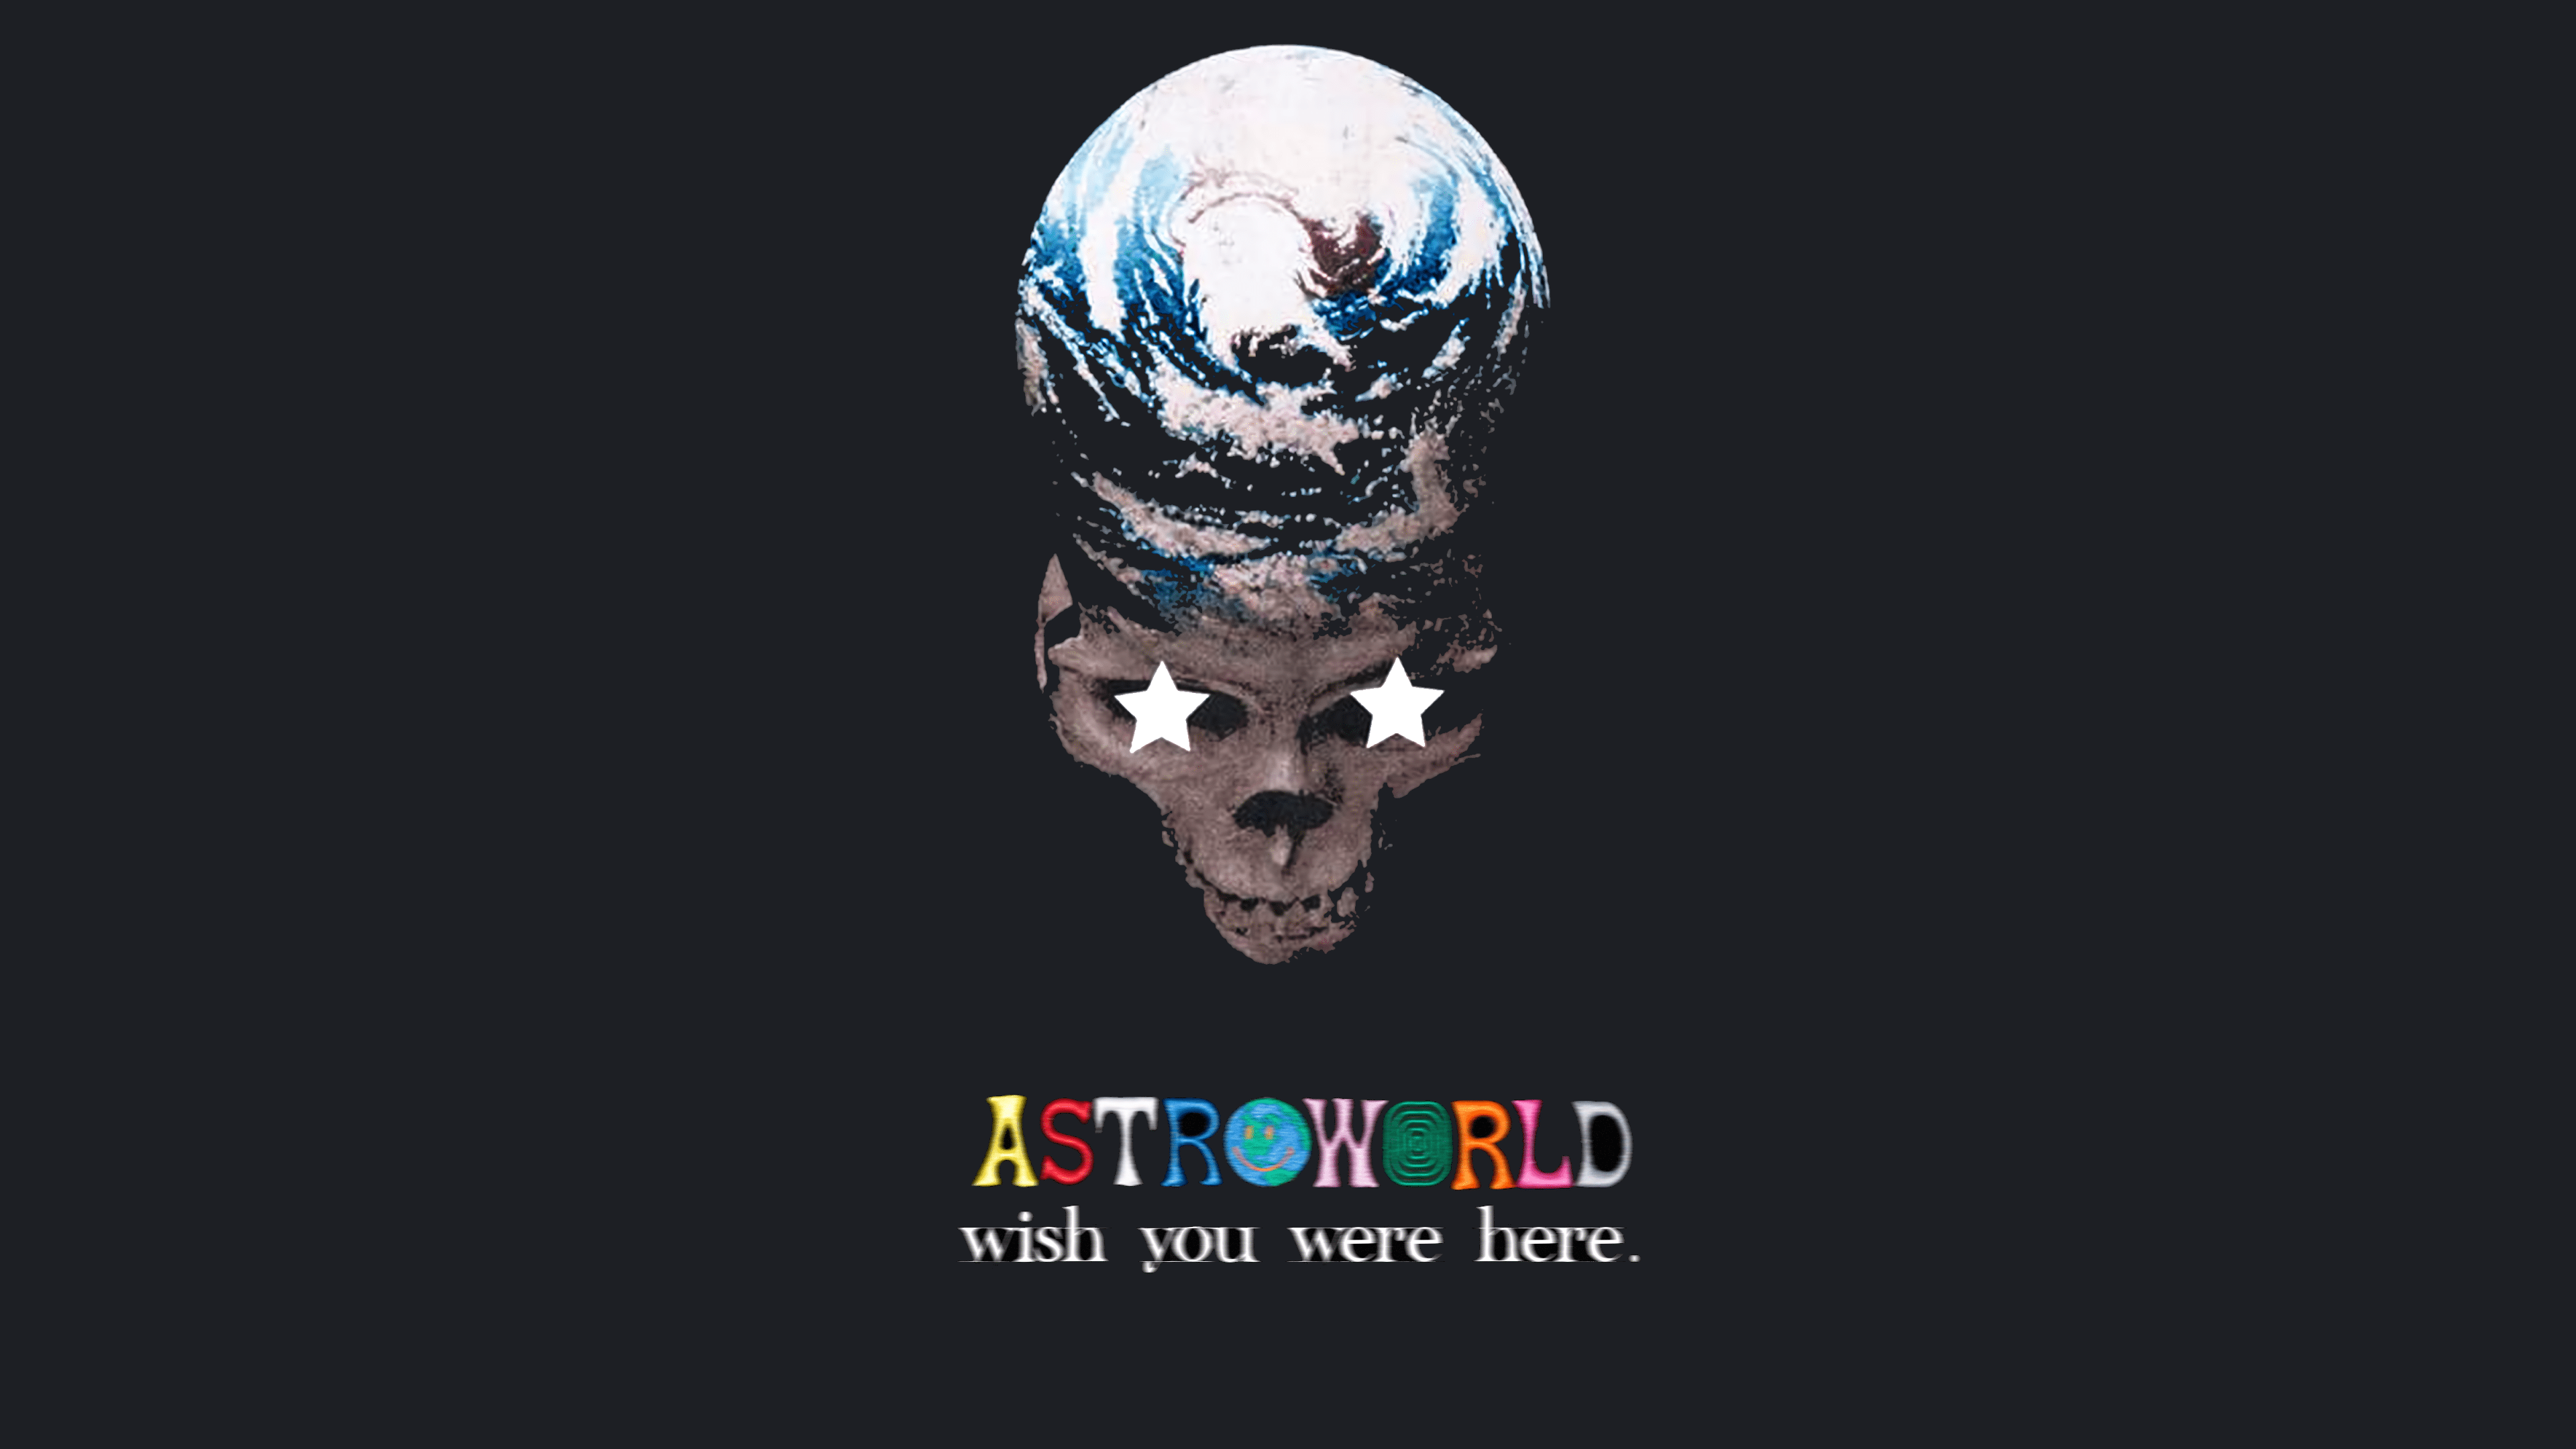 Astro World Wallpaper 1920X1080 : Astroworld Wallpapers - Wallpaper Cave